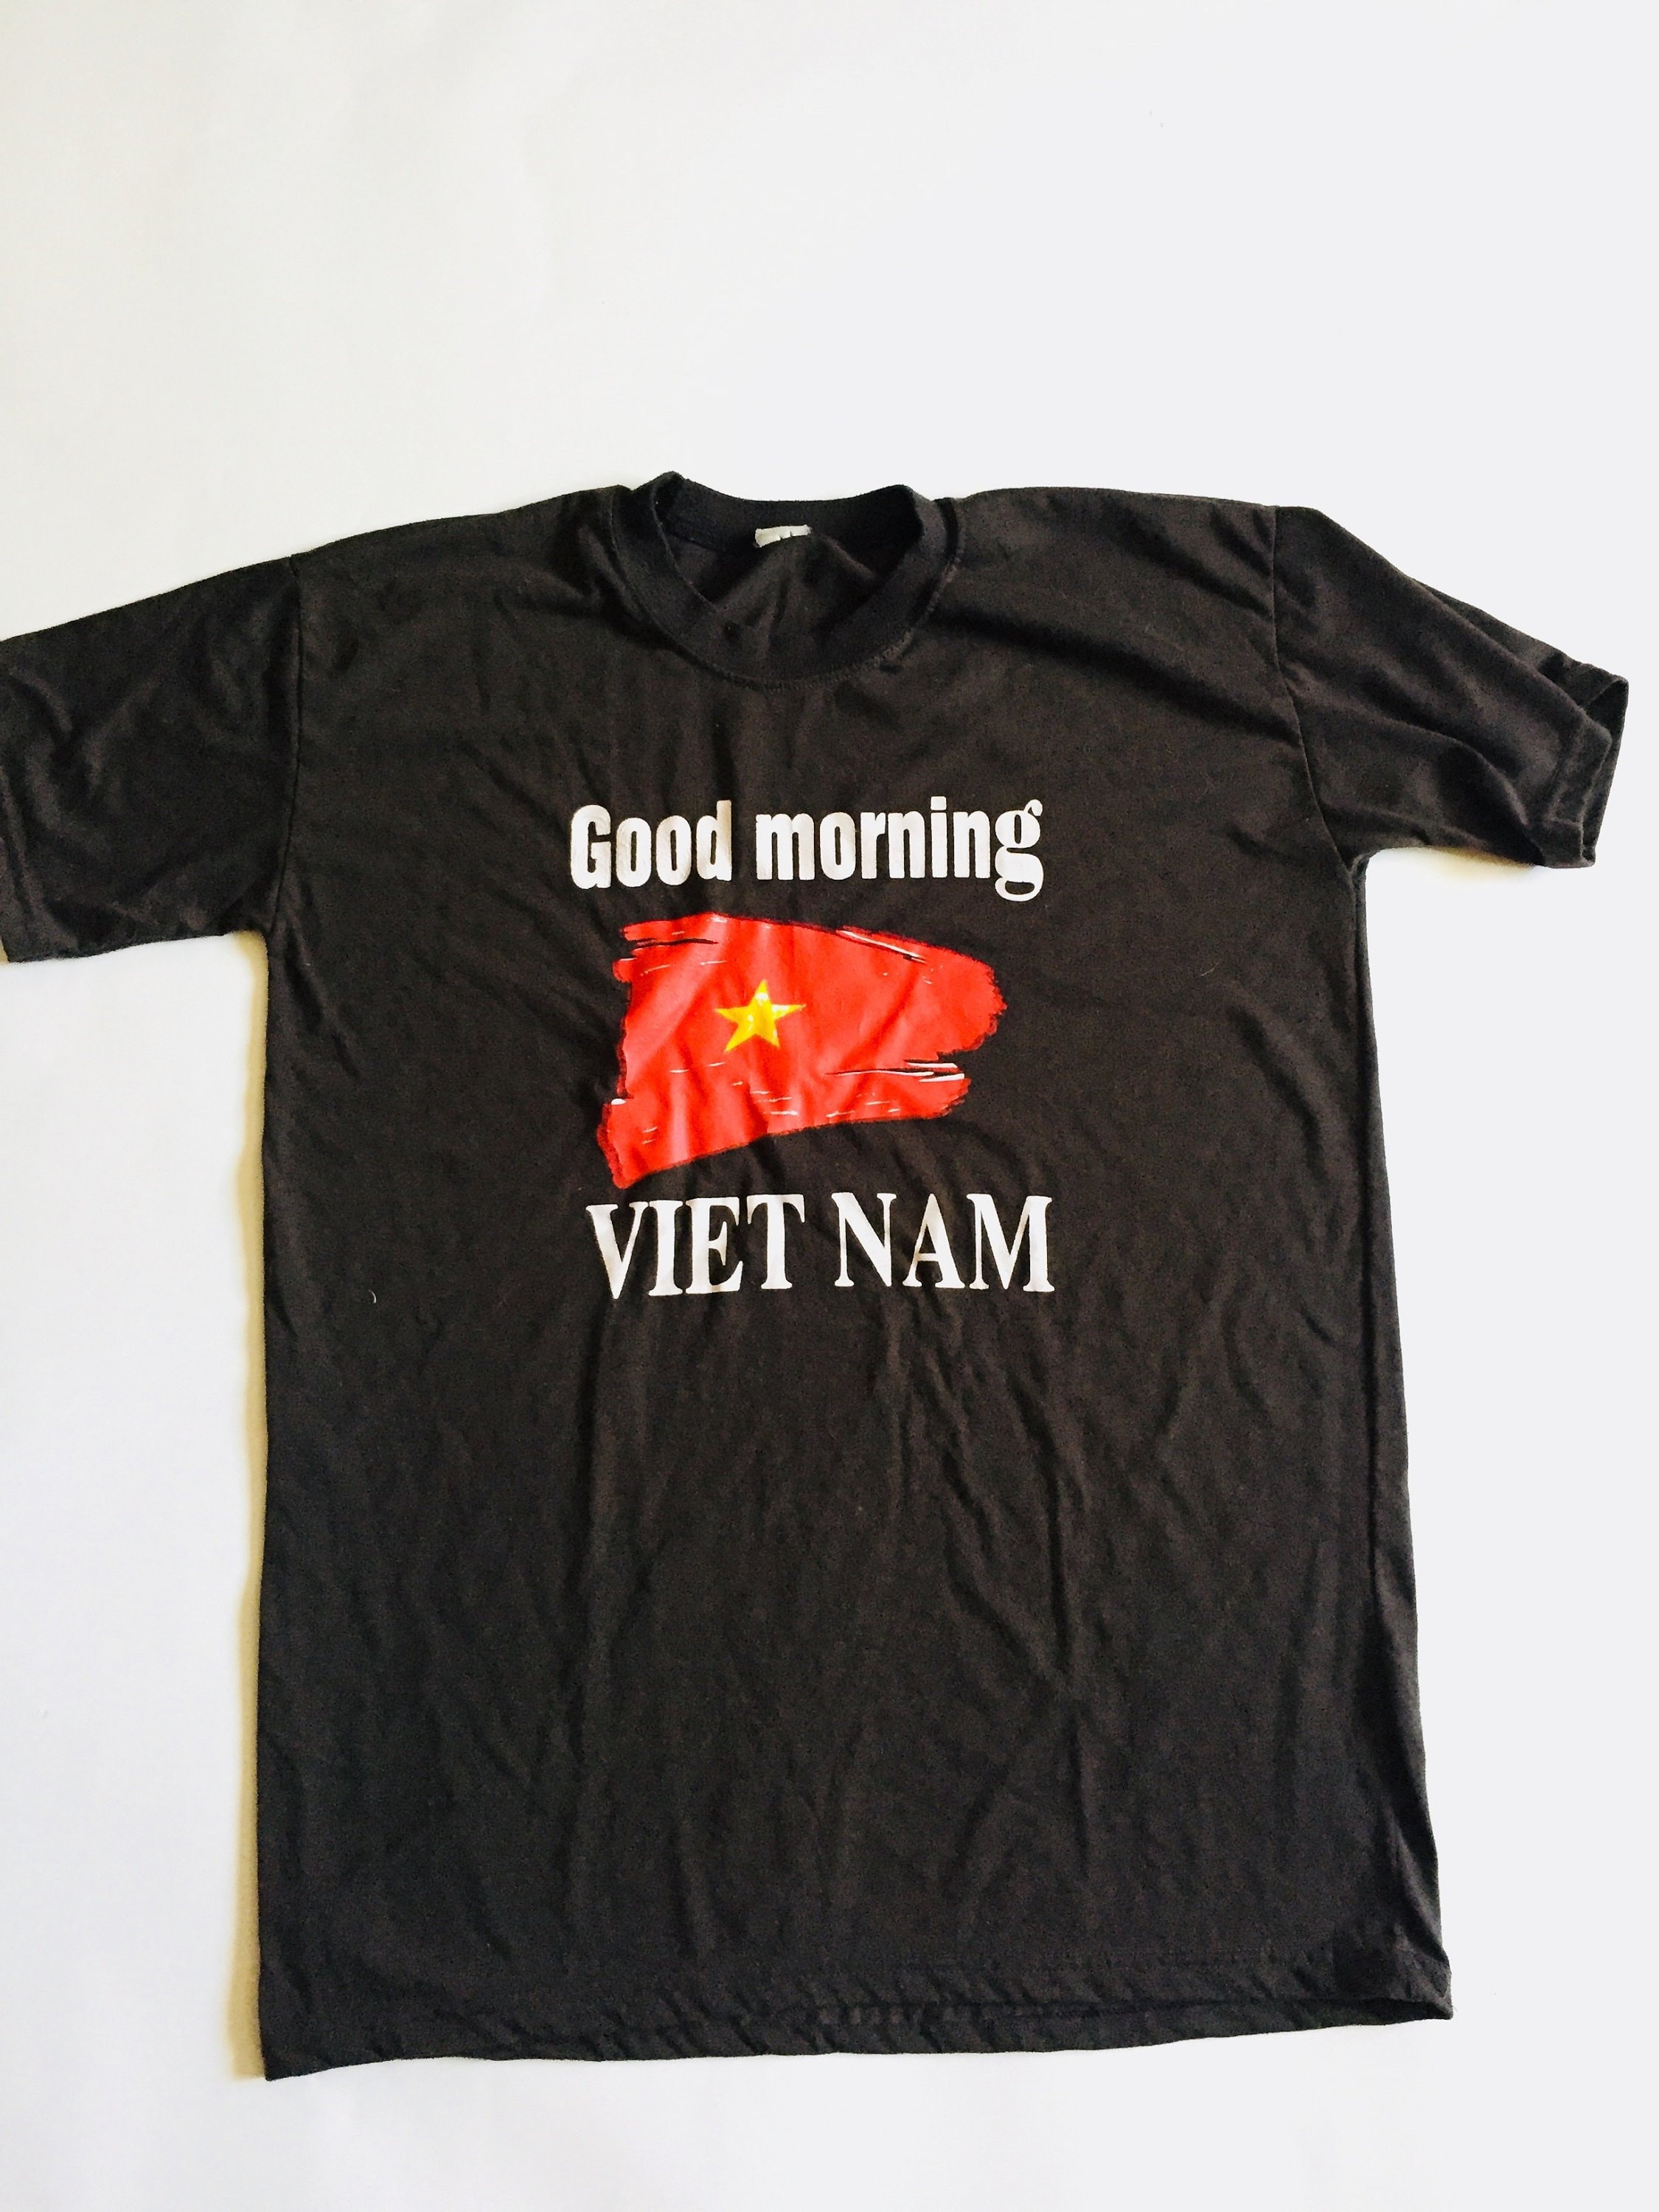 Good morning vietnam sabbath. Good morning Vietnam футболка. Футболка с флагом Вьетнама. Vietcong футболка. СТОПБАН В футболке Вьетнама.